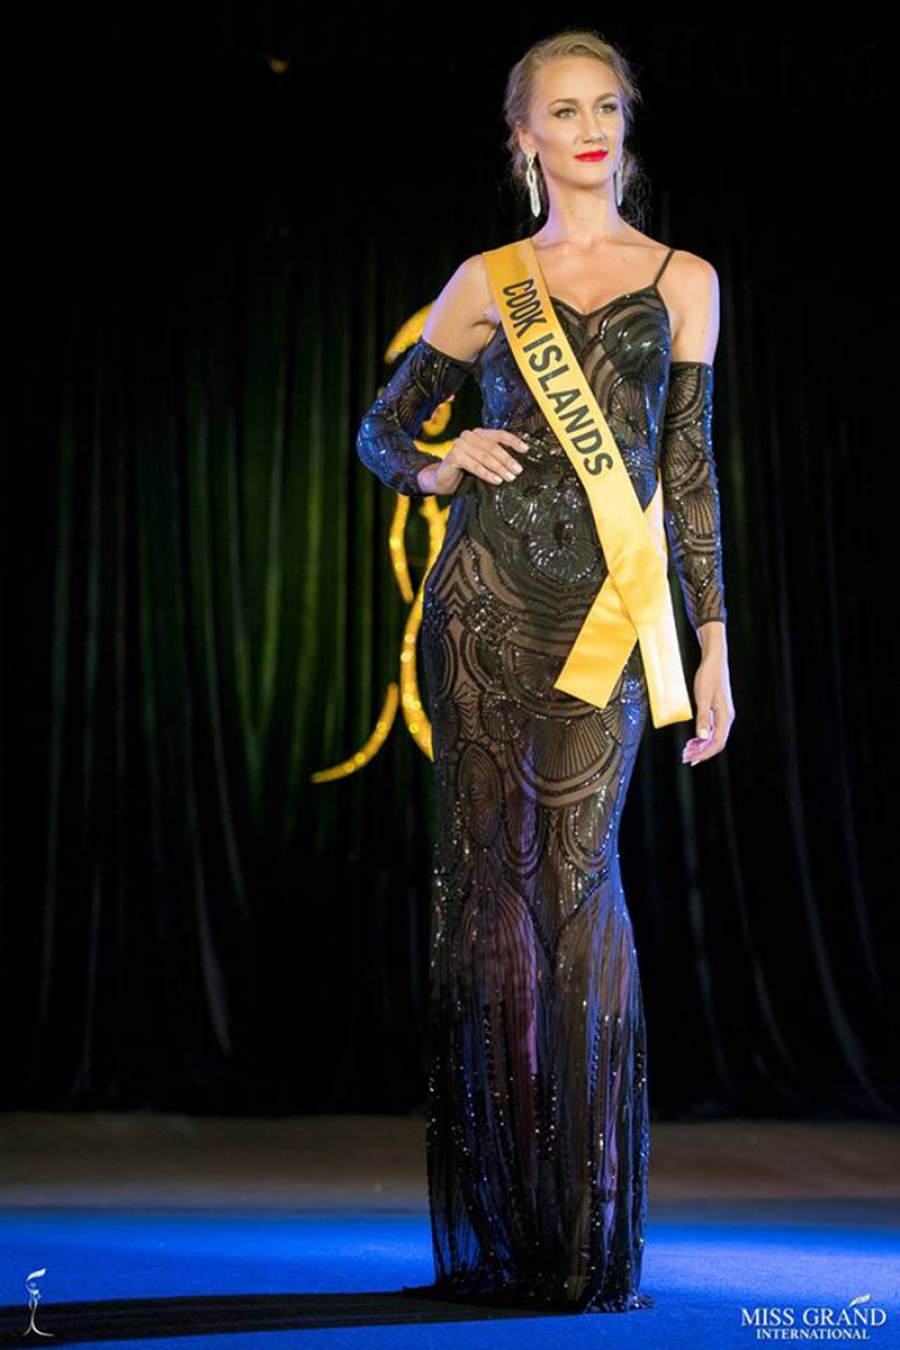 McKenzie in Myanmar for Miss Grand International